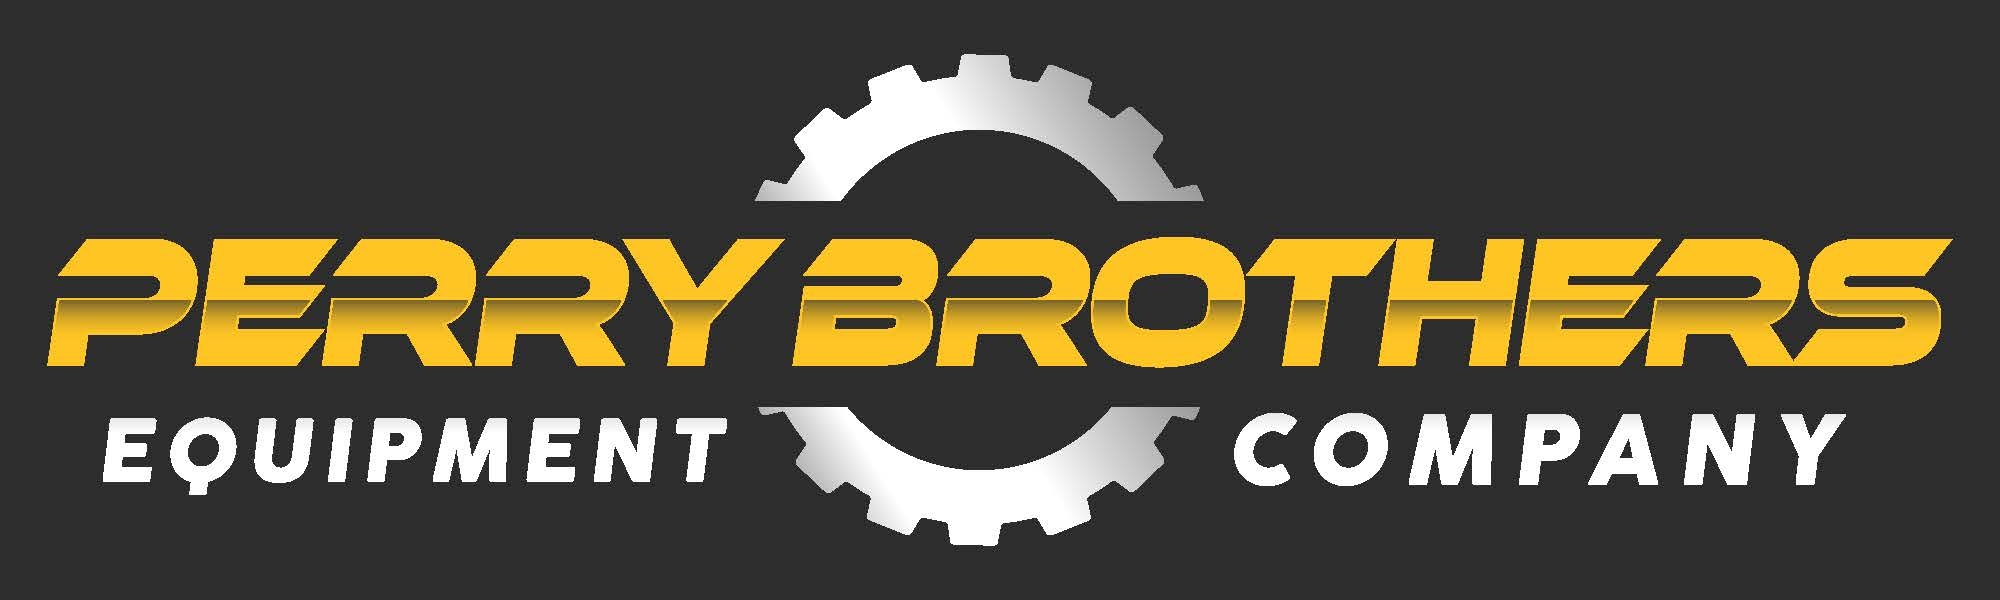 Perry Brothers Equipment Company company logo